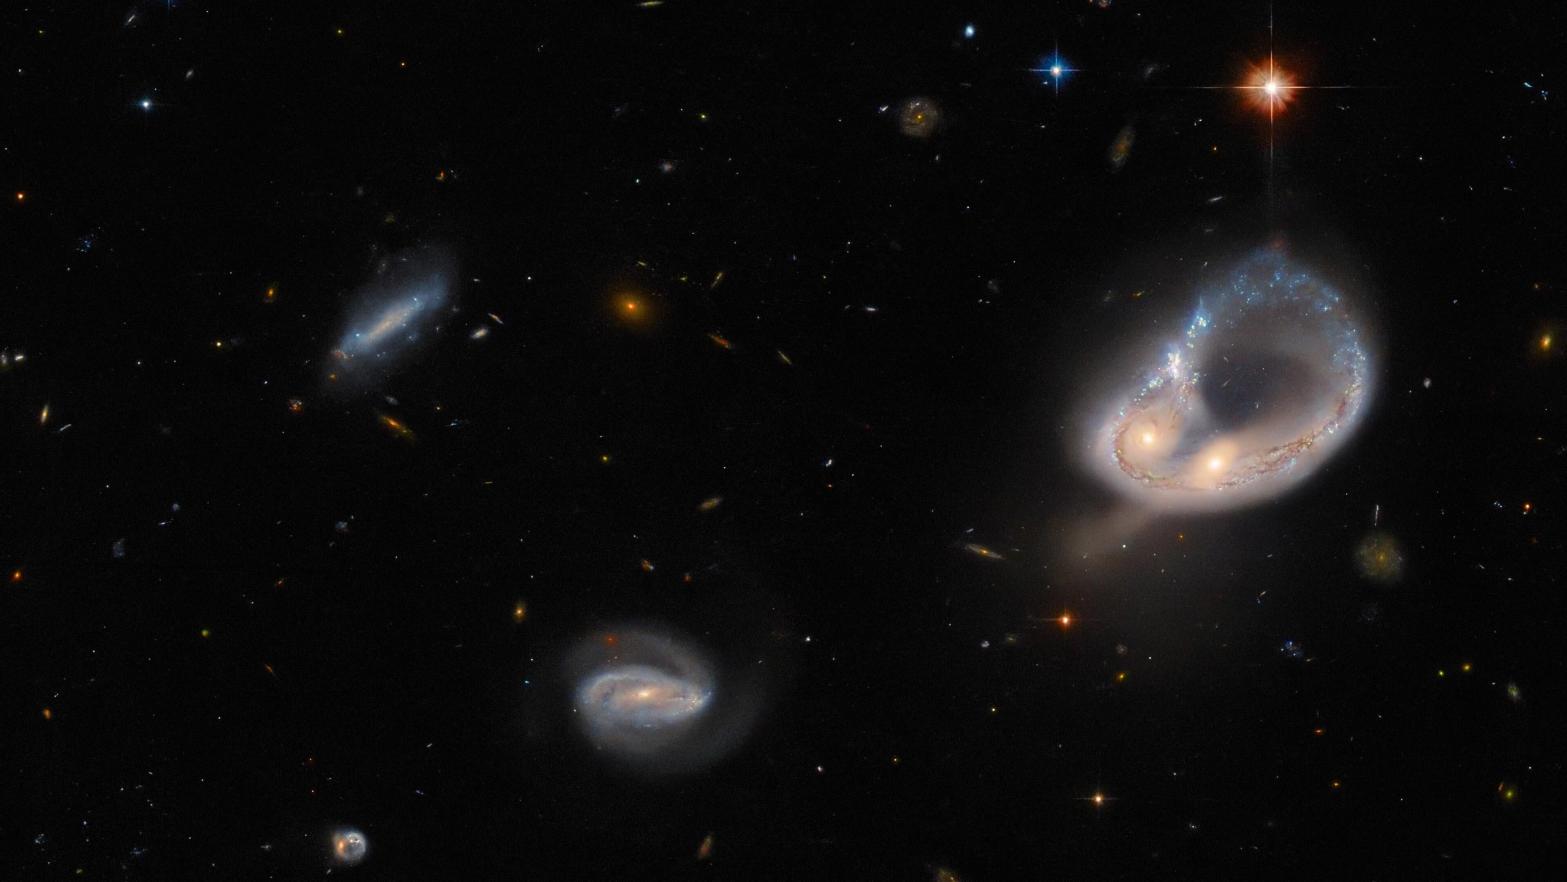 Image: ESA/Hubble & NASA, Dark Energy Survey/DOE/FNAL/DECam/CTIO/NOIRLab/NSF/AURA, J. Dalcanton